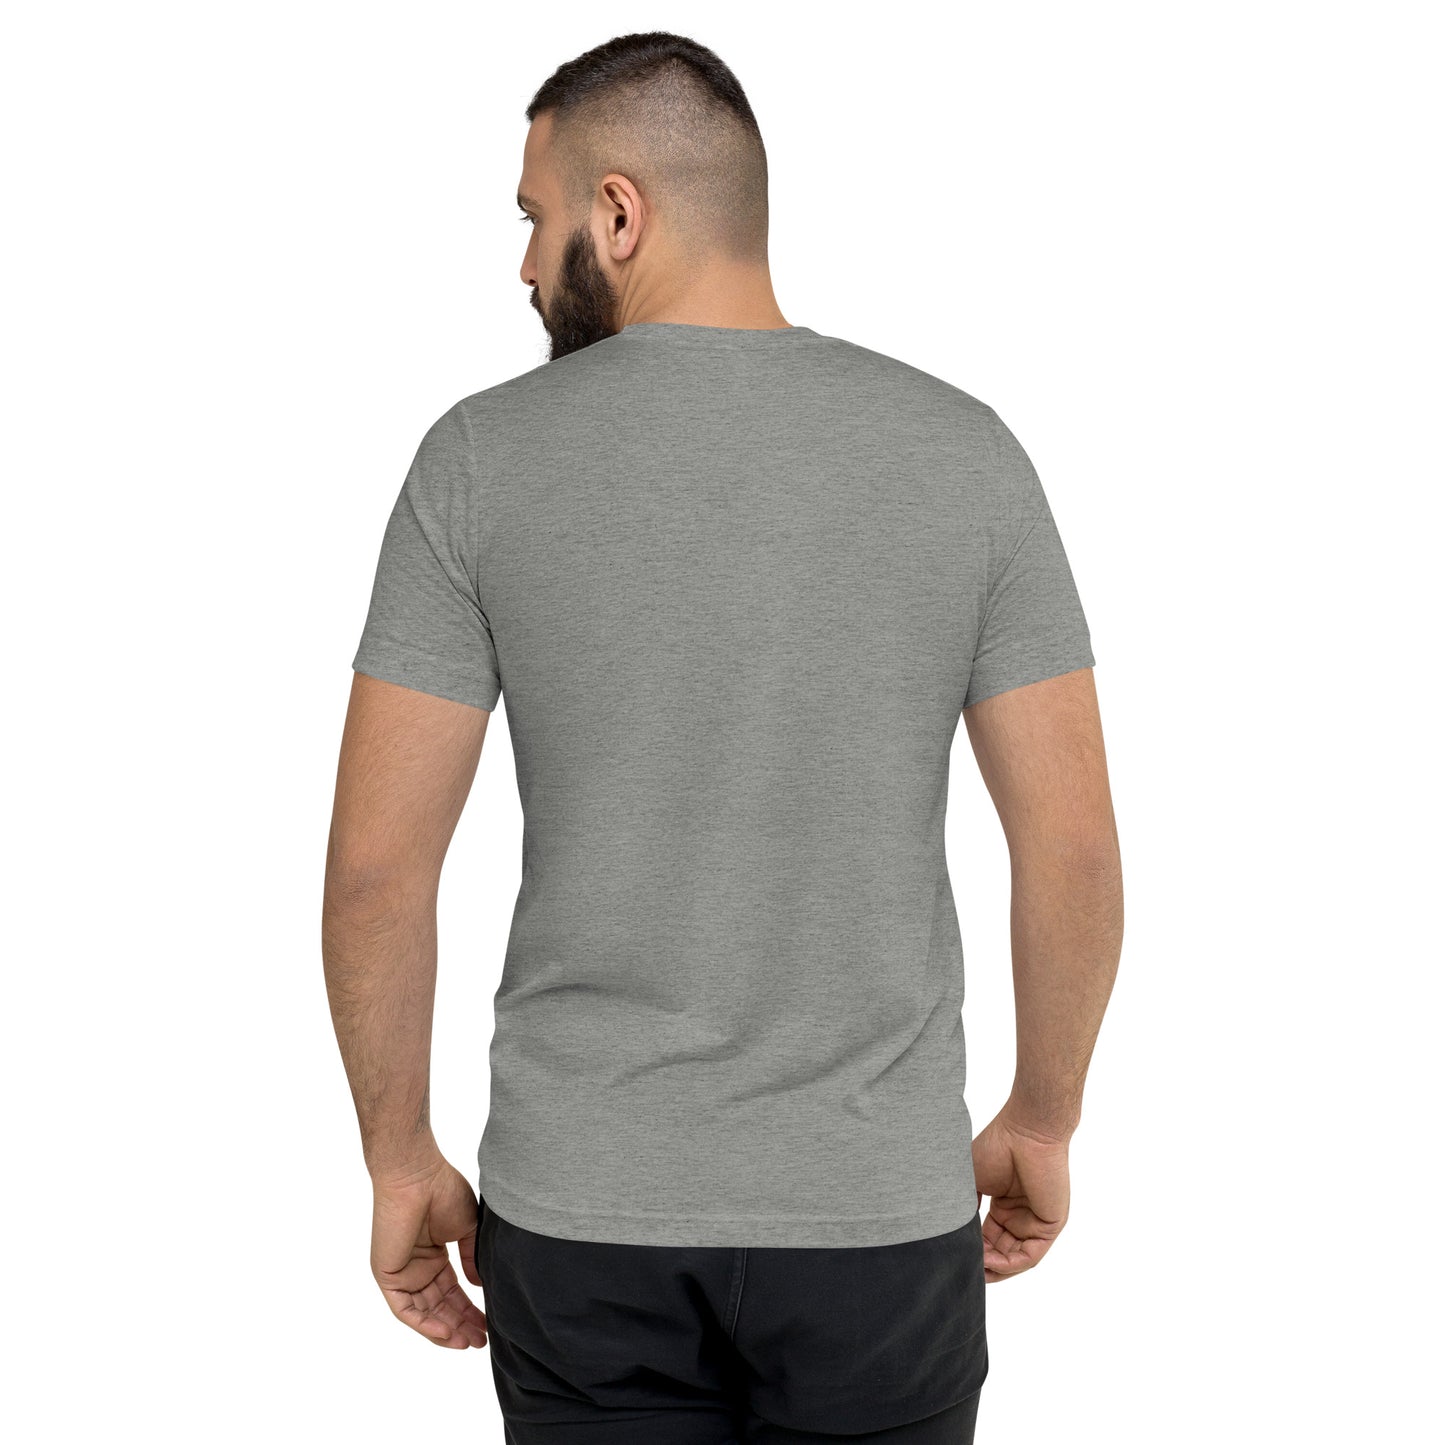 214 Dallas Short Sleeve Tri-Blend T-Shirt